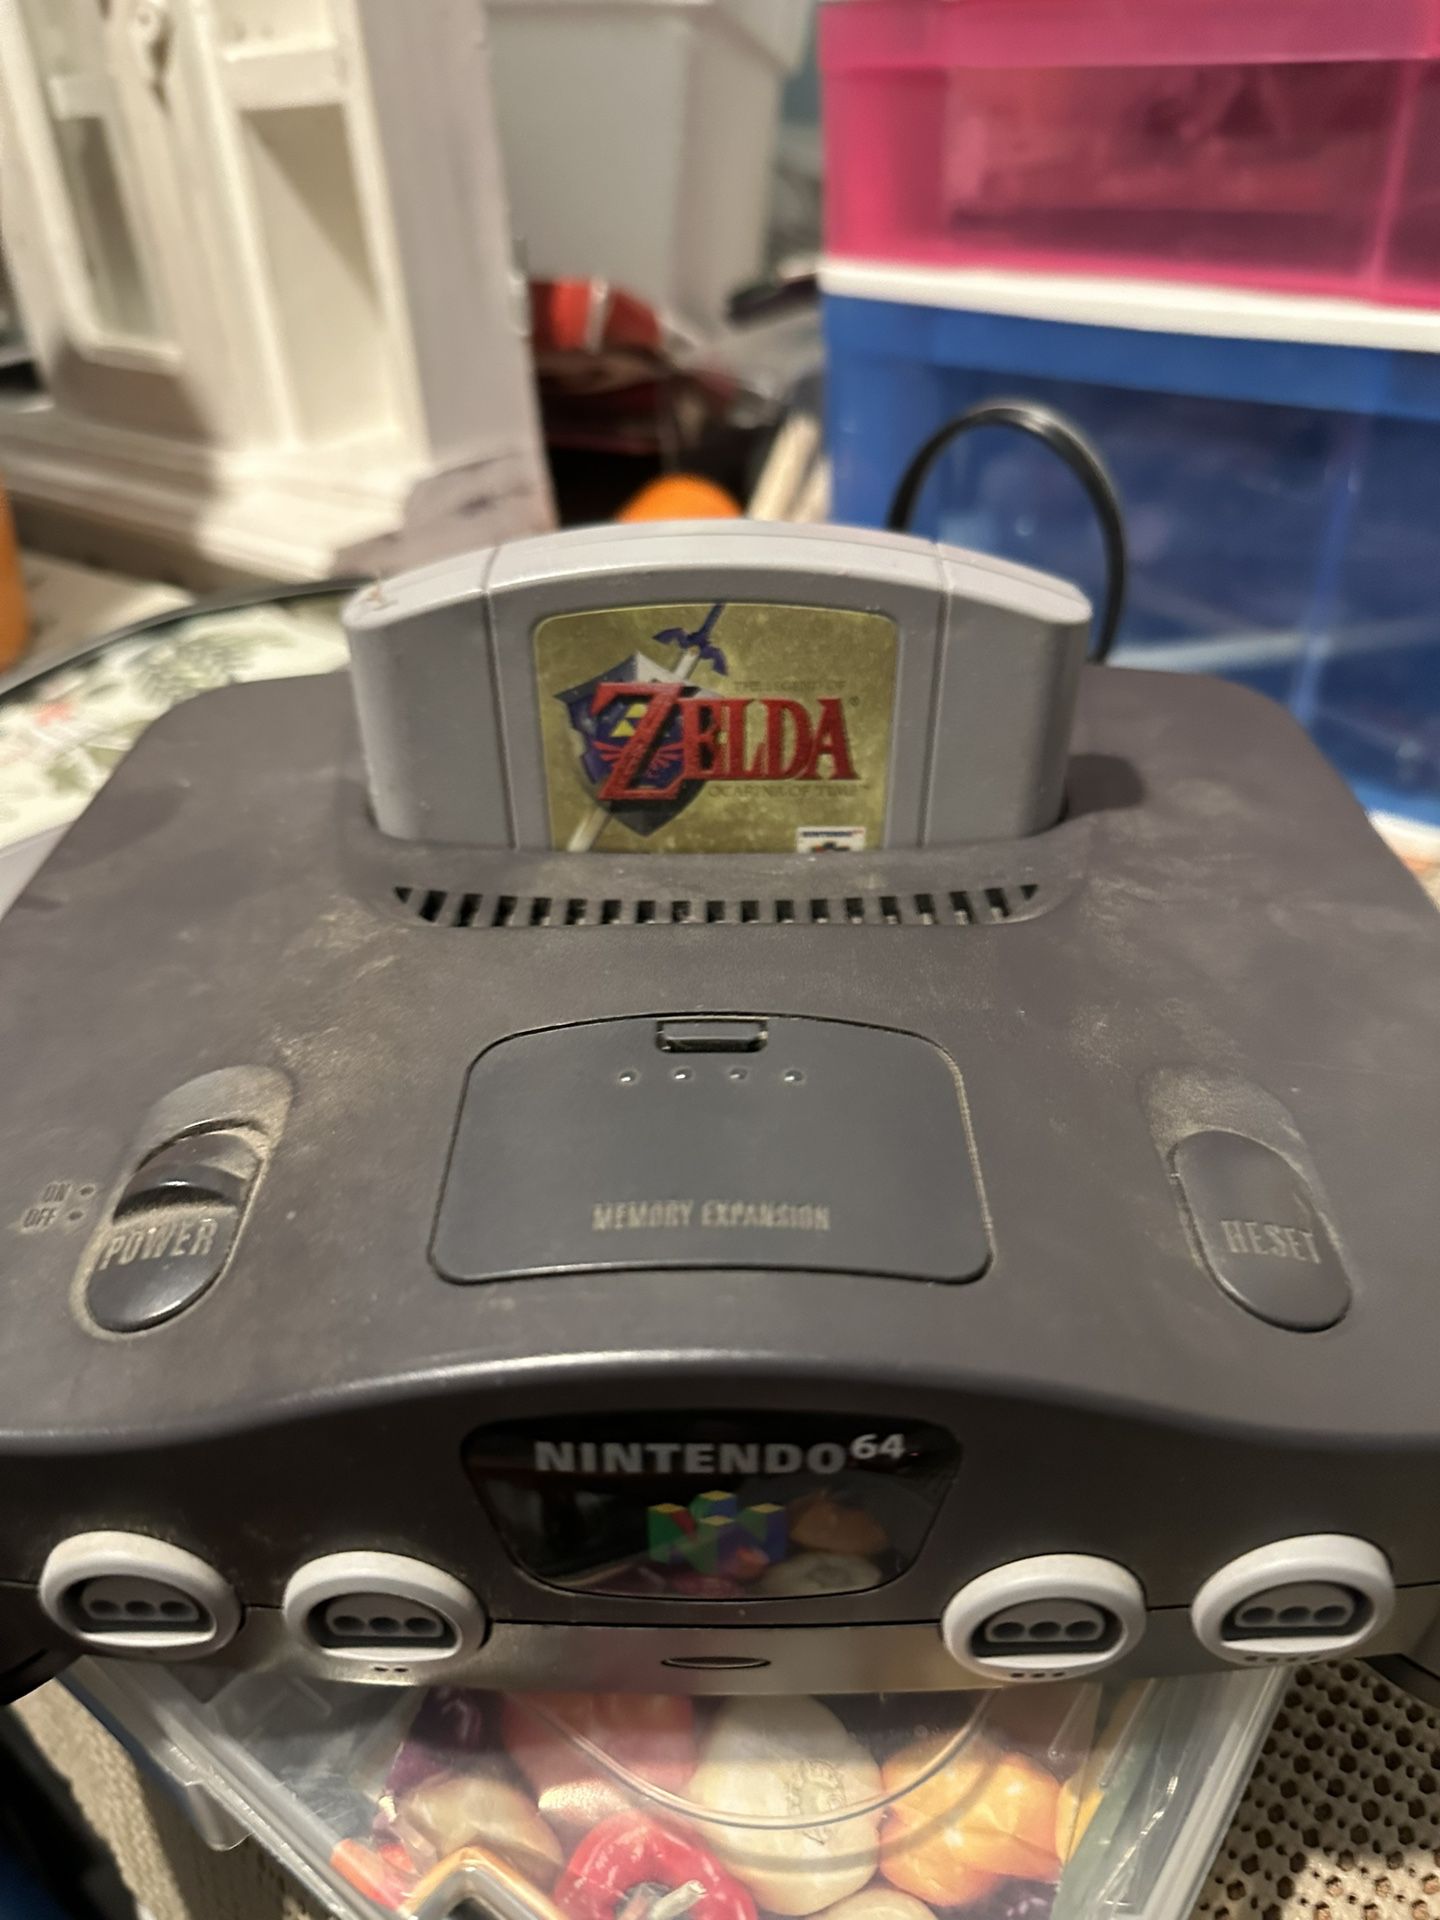 Nintendo 64 With Zelda Game